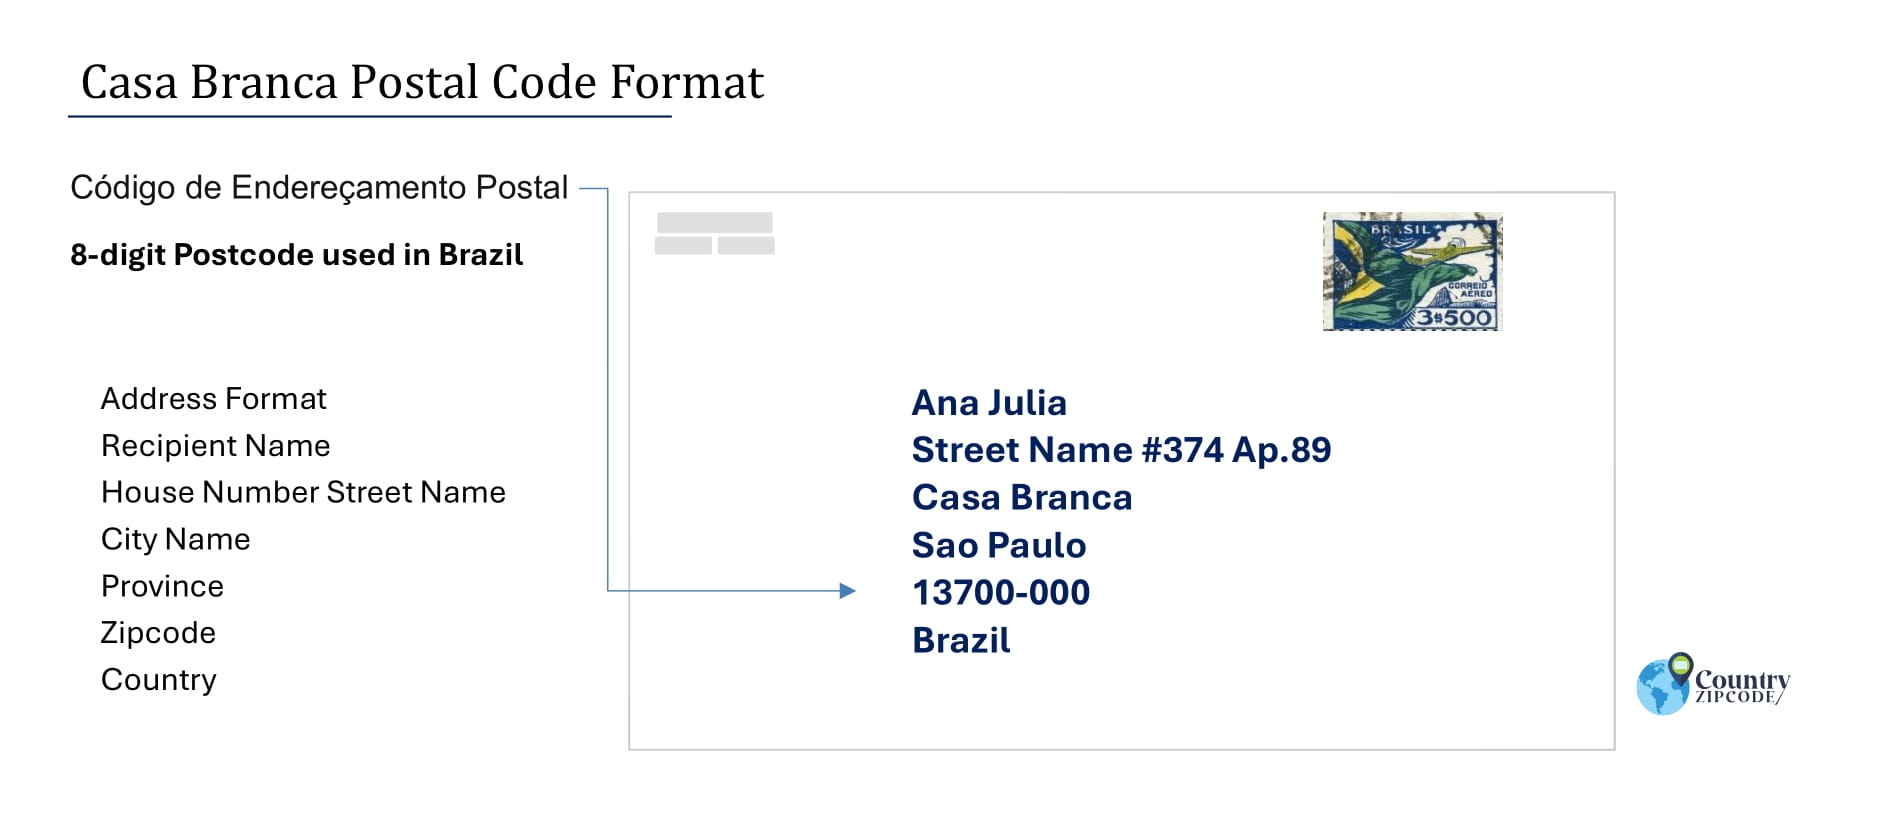 Example of Codigo de Enderecamento Postal and Address format of Casa Branca Brazil